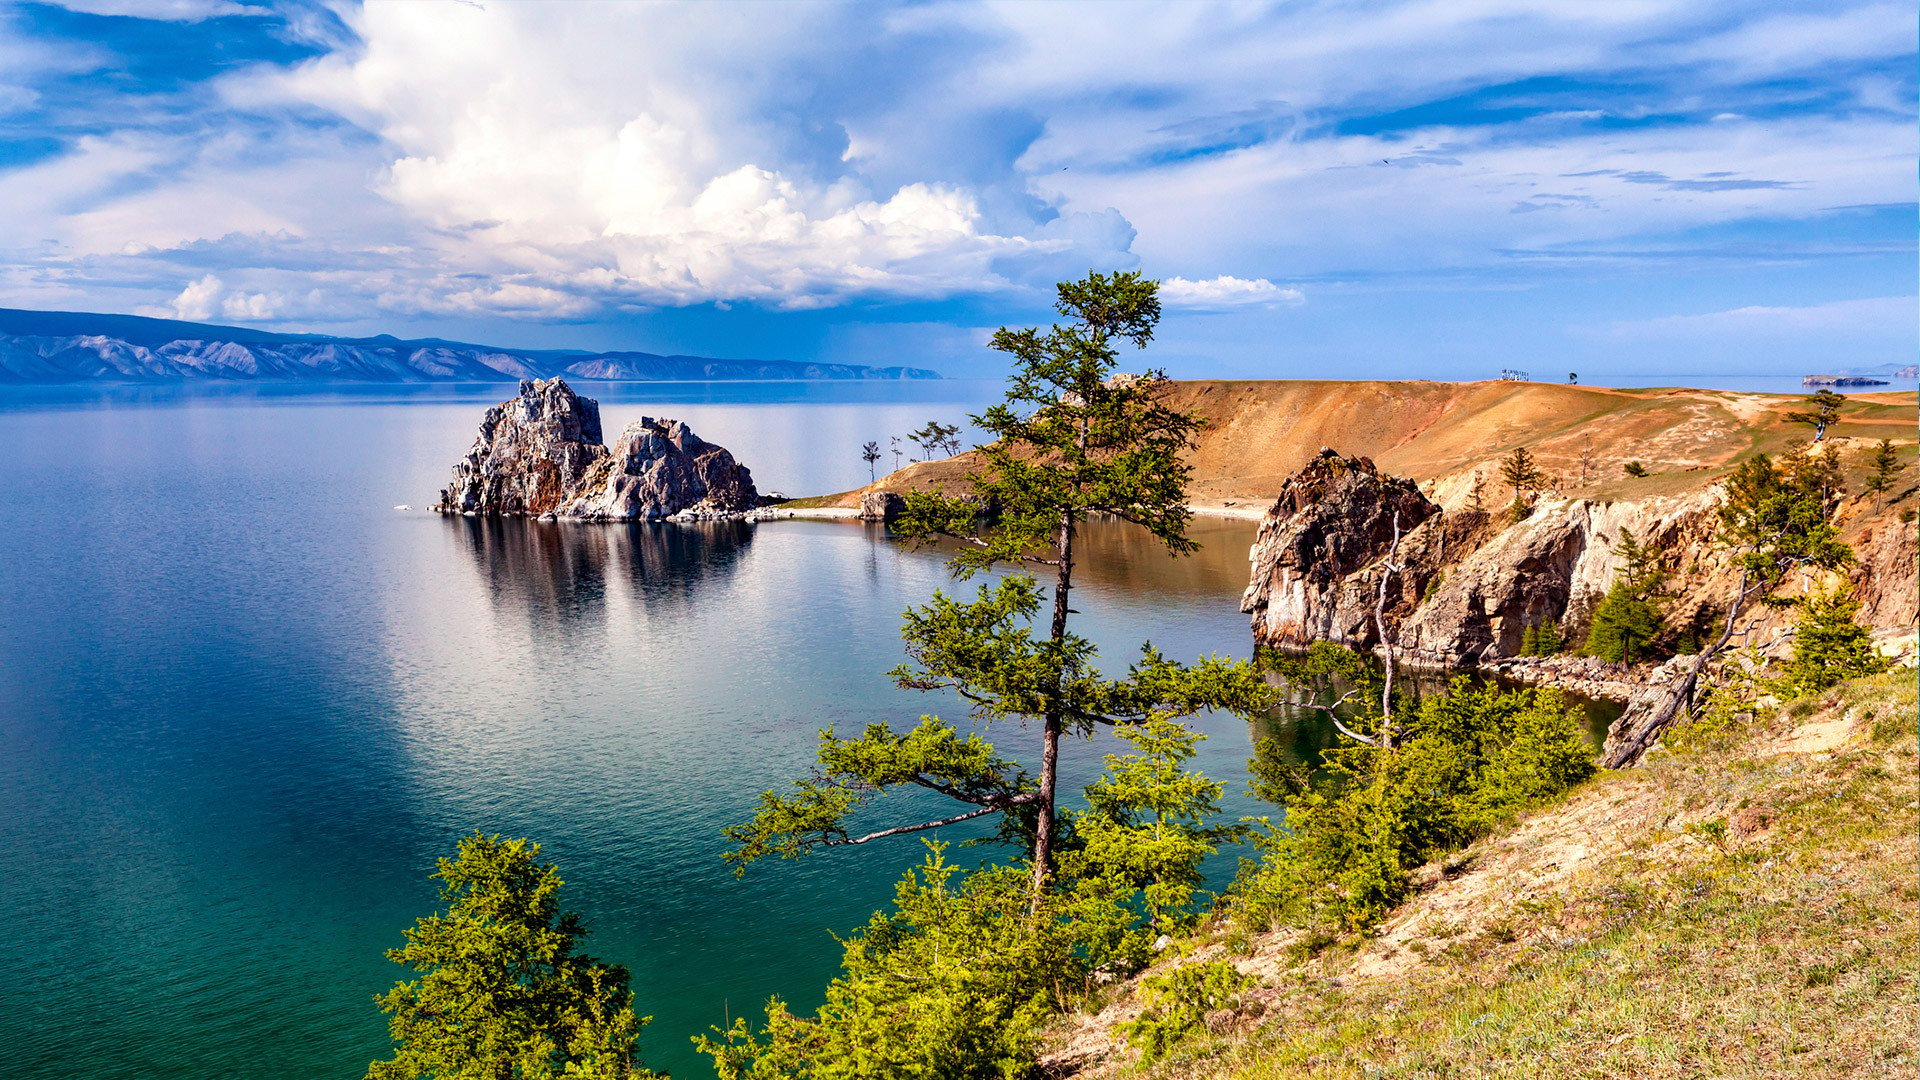 Myth busting Lake Baikal Its not too far expensive or